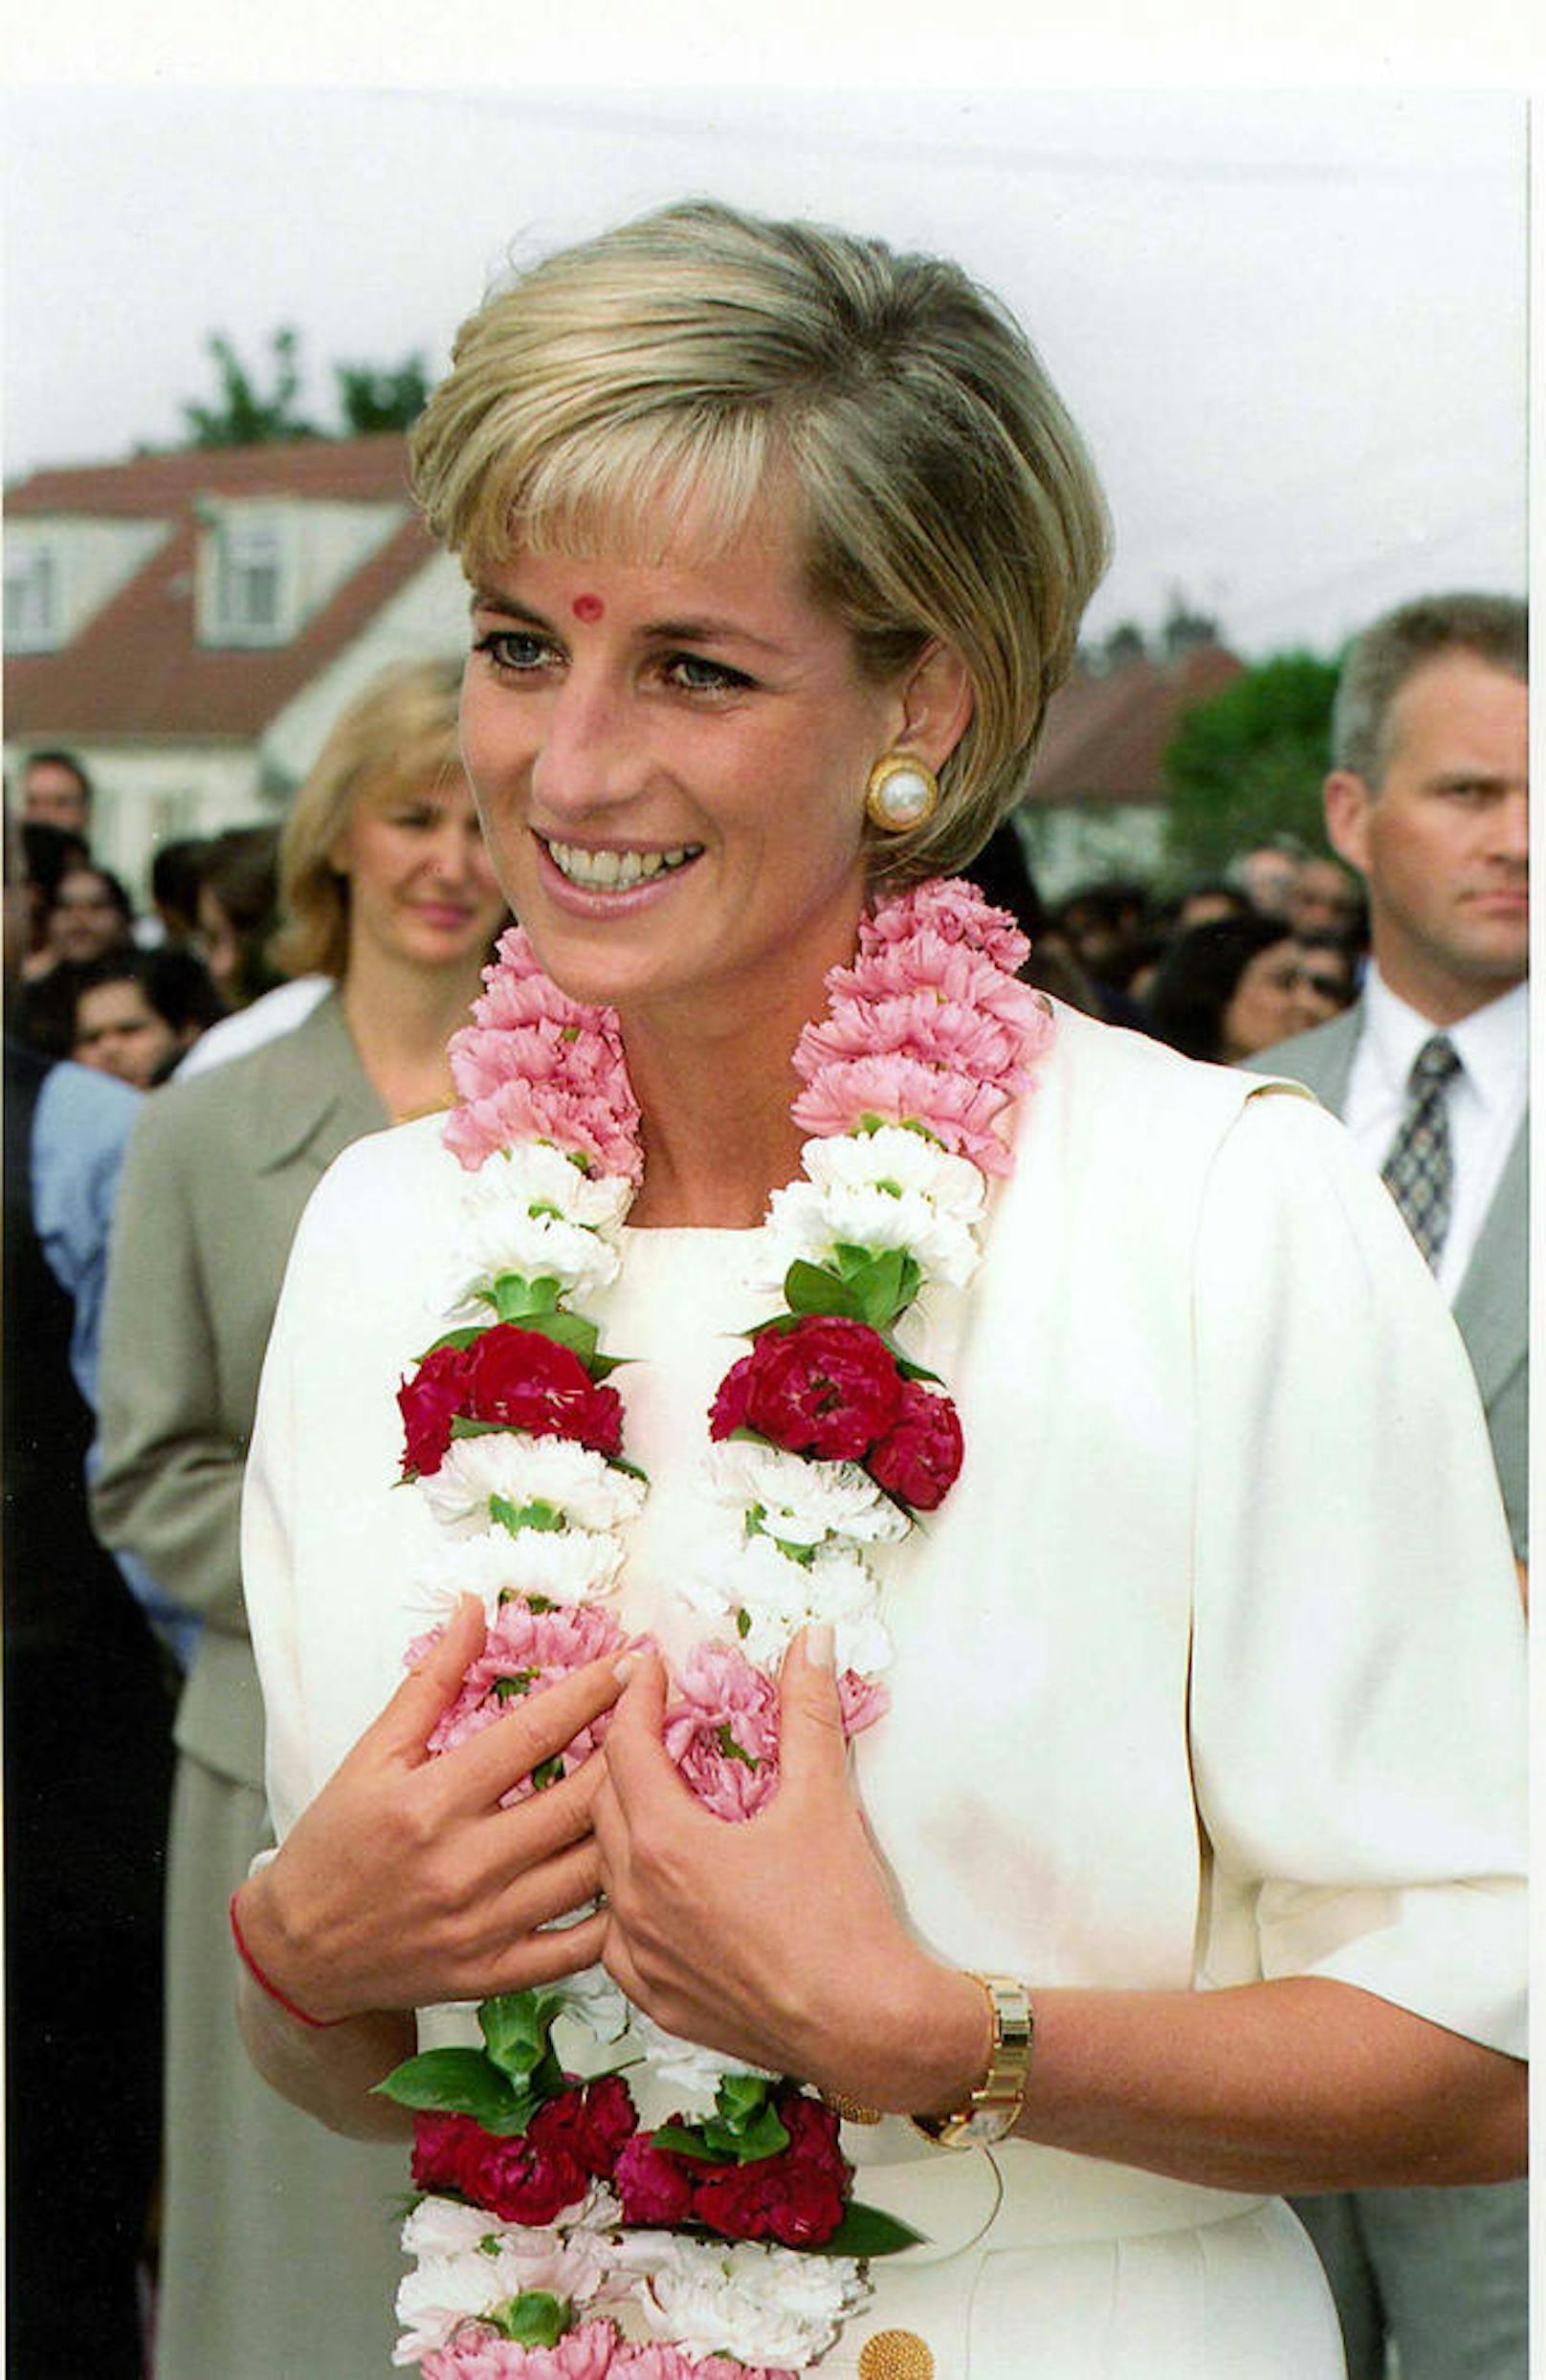 Happy Birthday, Princess Diana.

